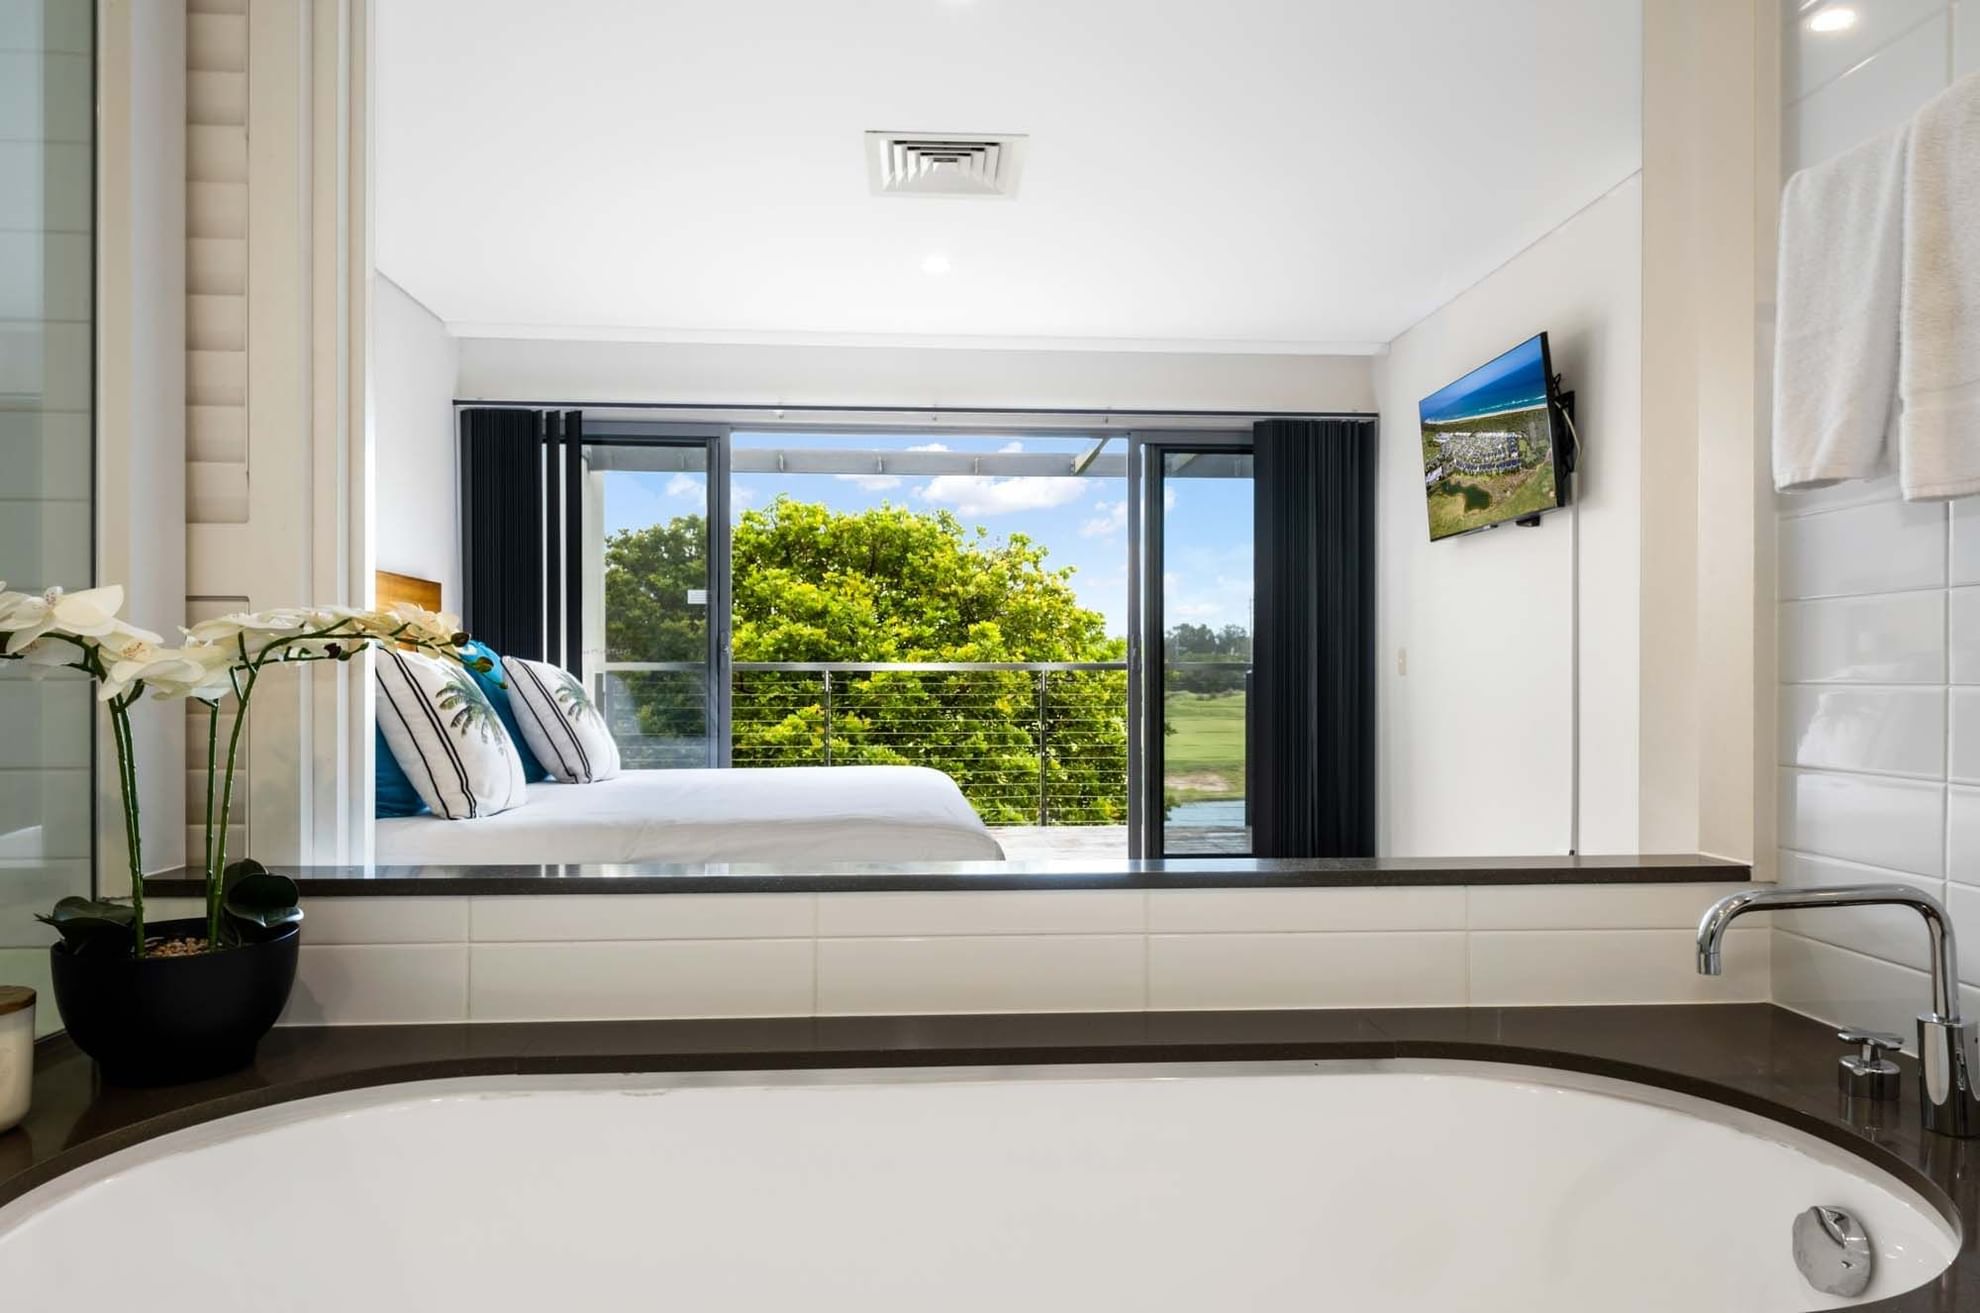 Deluxe Three Bedroom Villa at only 5 star resort & hotel In Central Coast